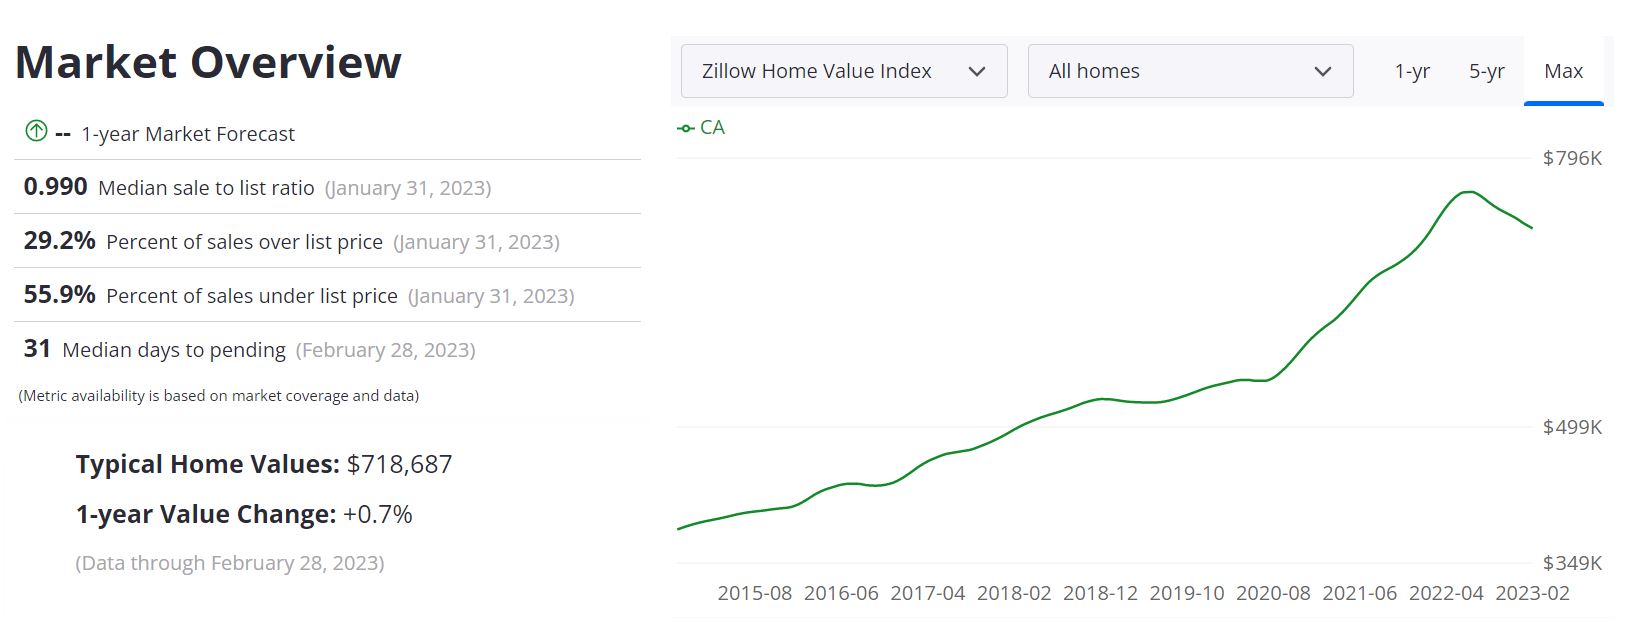 California Home Values Forecast